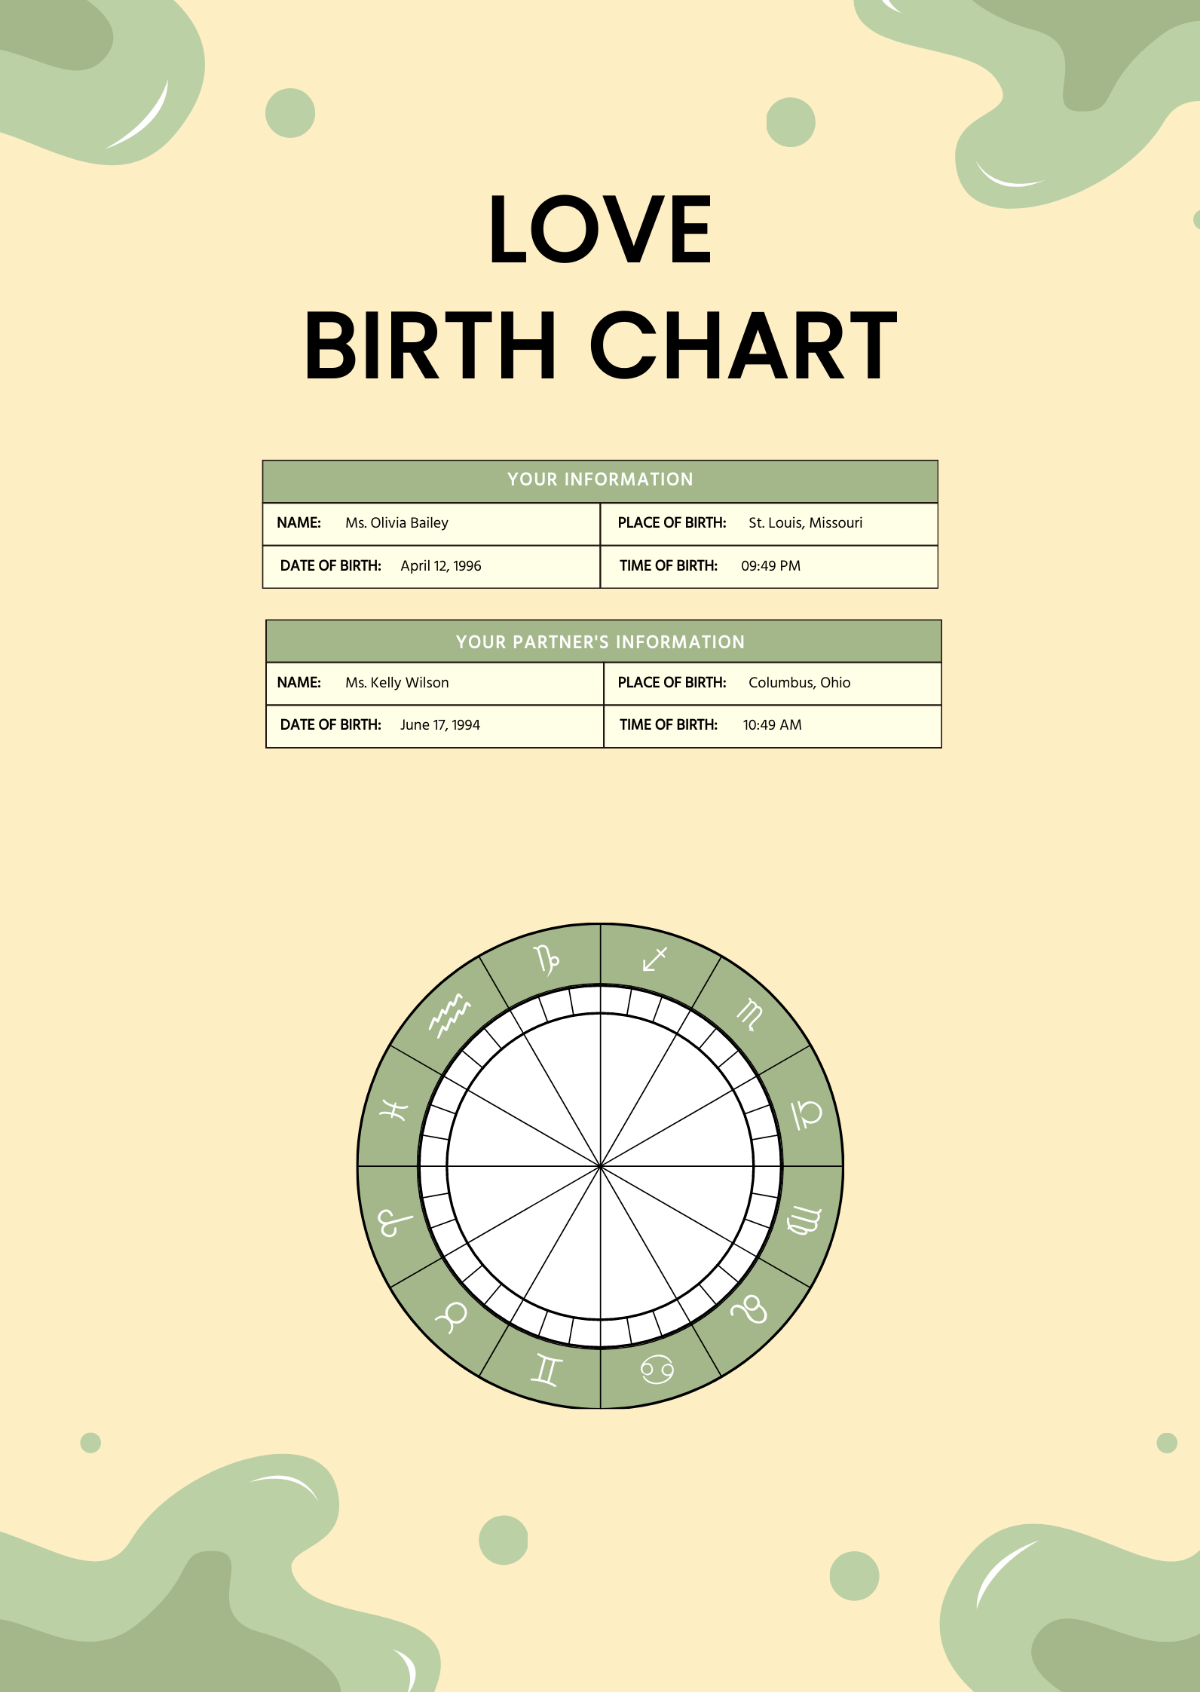 Love Birth Chart Template